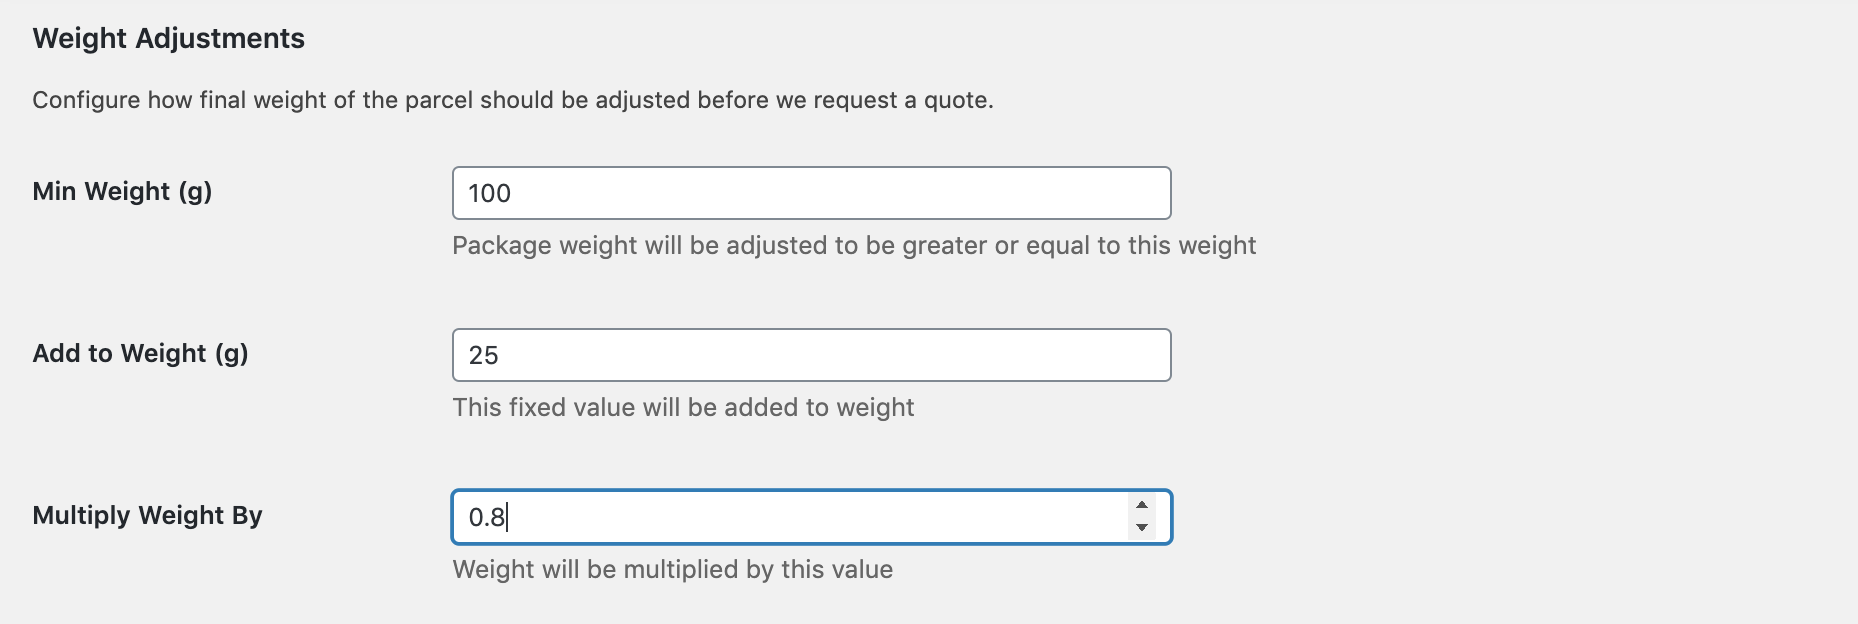 Configure weight adjustments